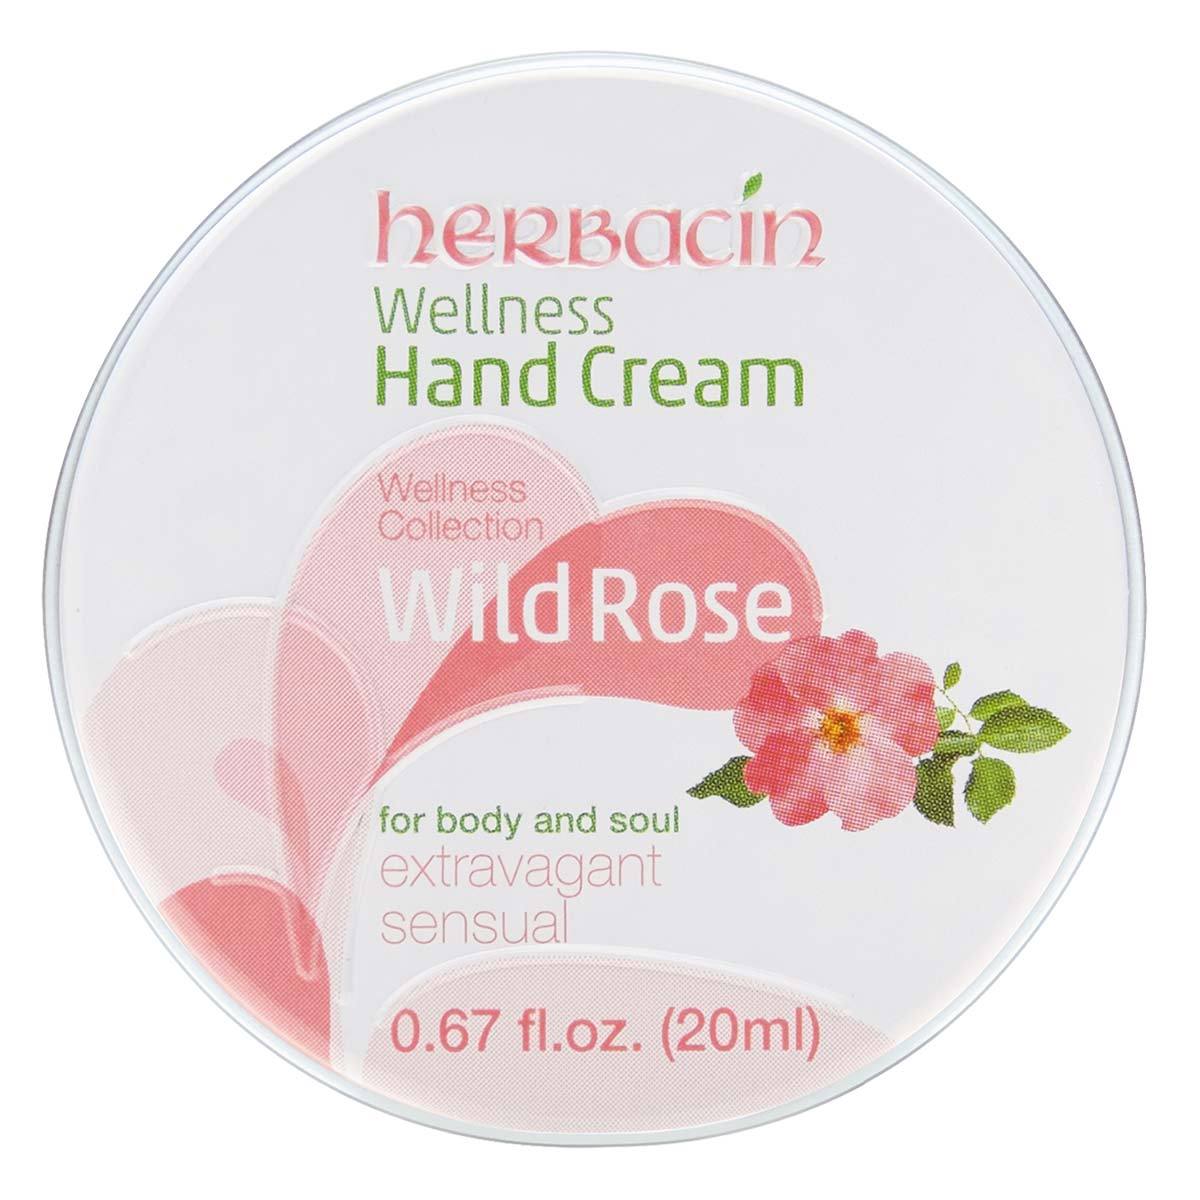 Primary image of Wild Rose Wellness Hand Cream Tin